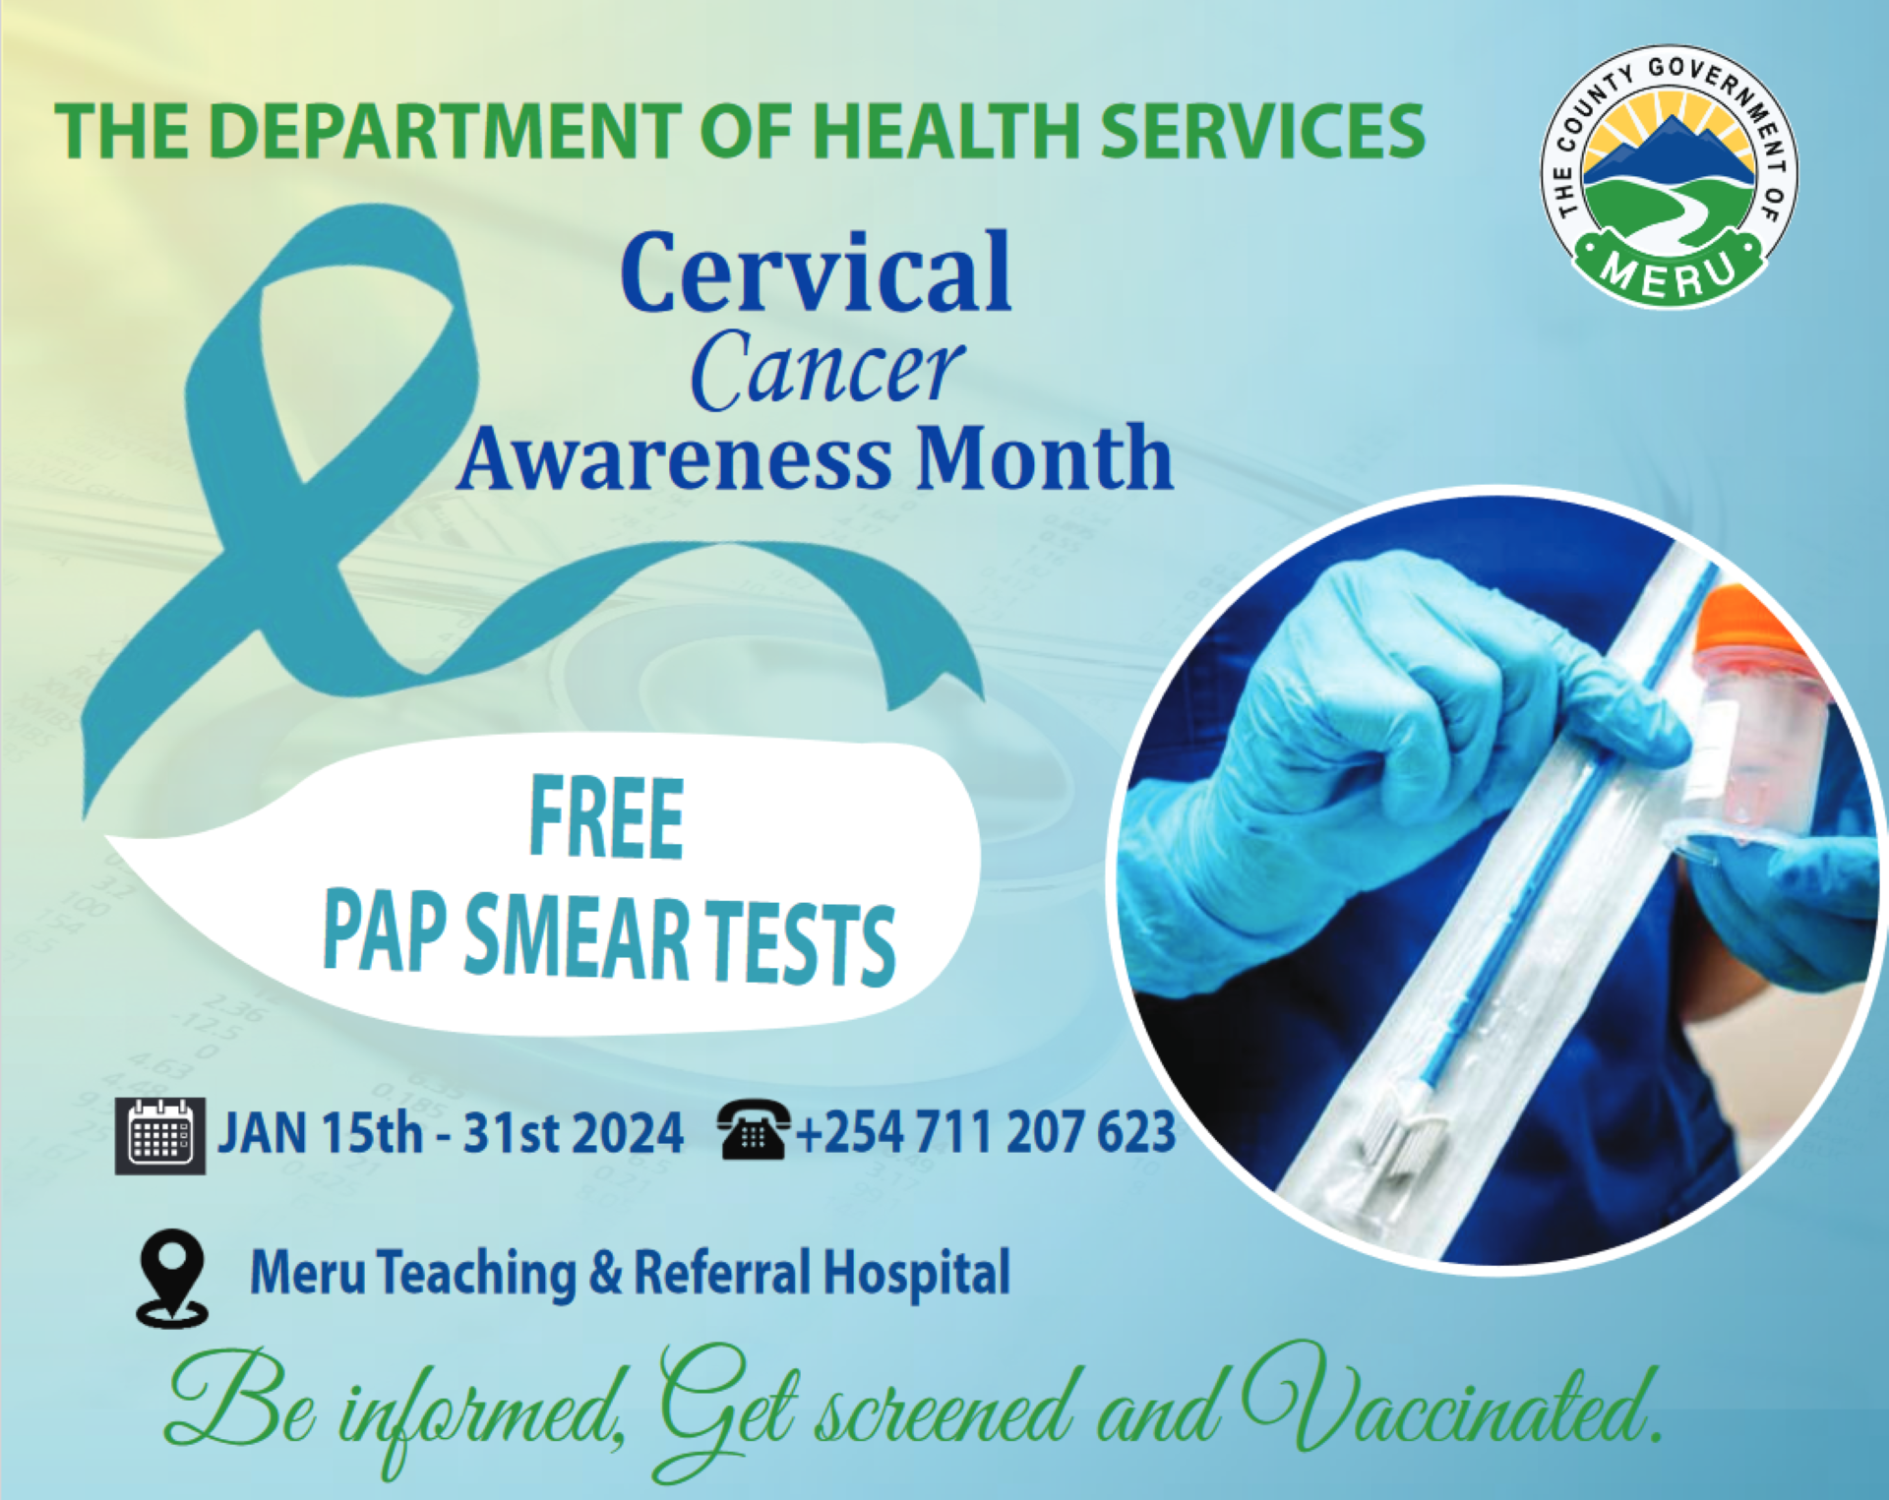 CERVICAL CANCER AWARENESS MONTH. FREE PAP SMEAR TESTS.